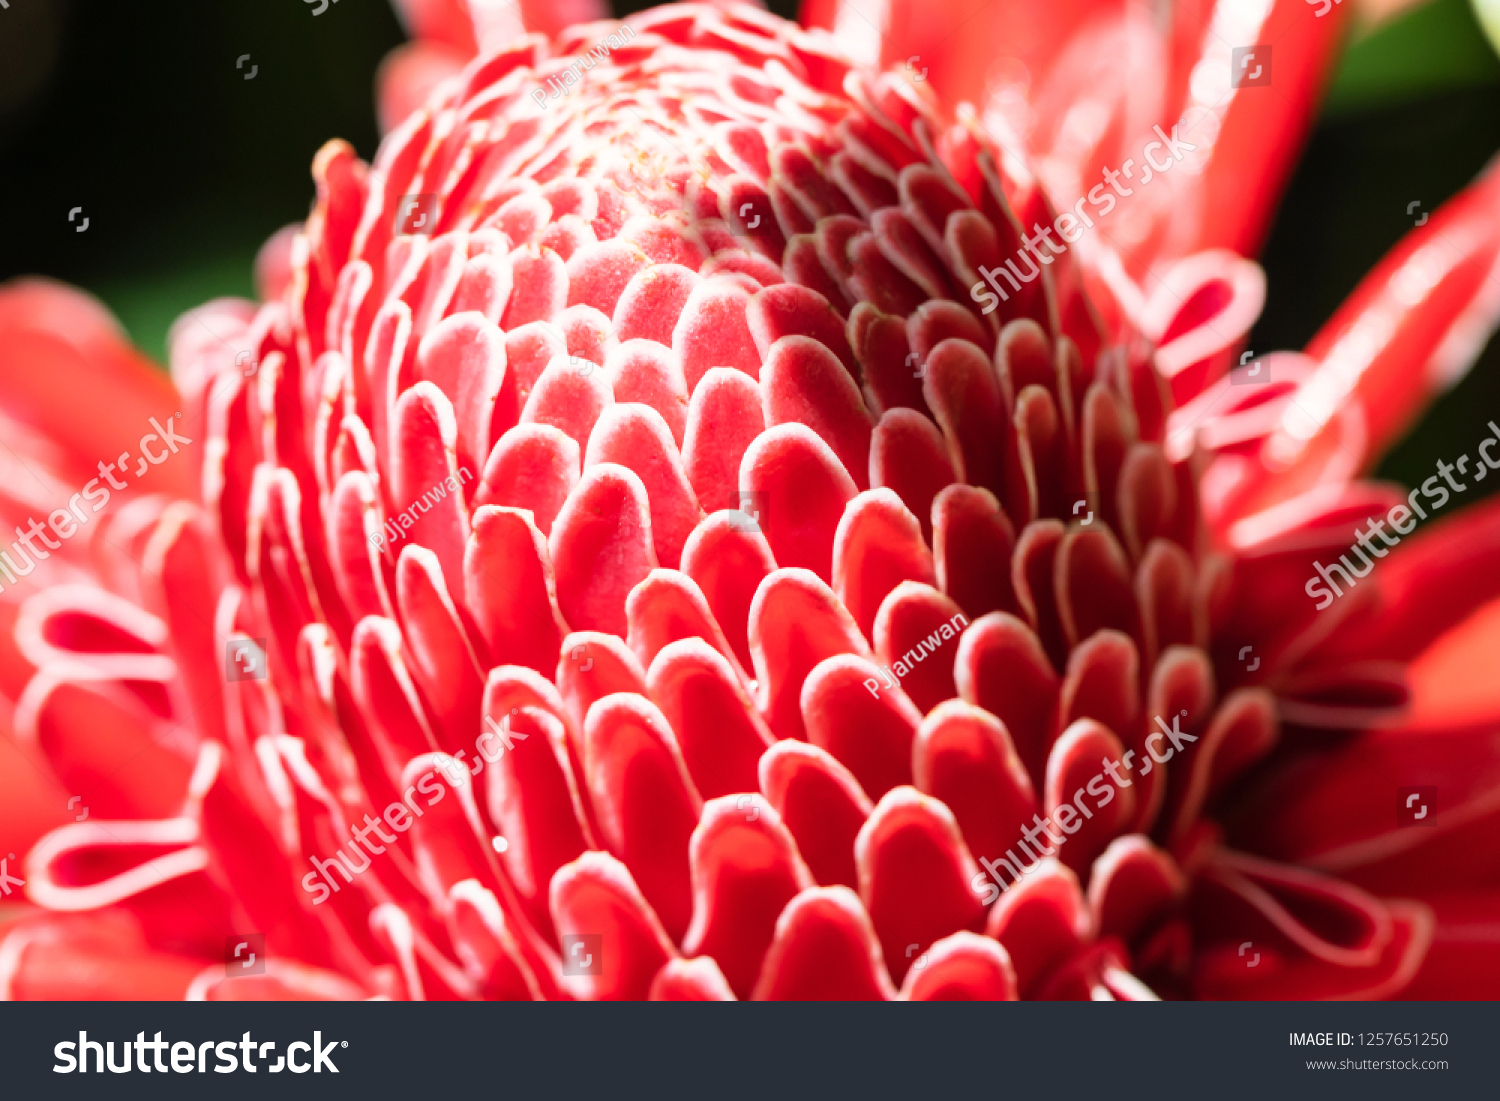 Tropical flower red torch ginger (Etlingera elatior or zingiberaceae) on green nature background. #1257651250